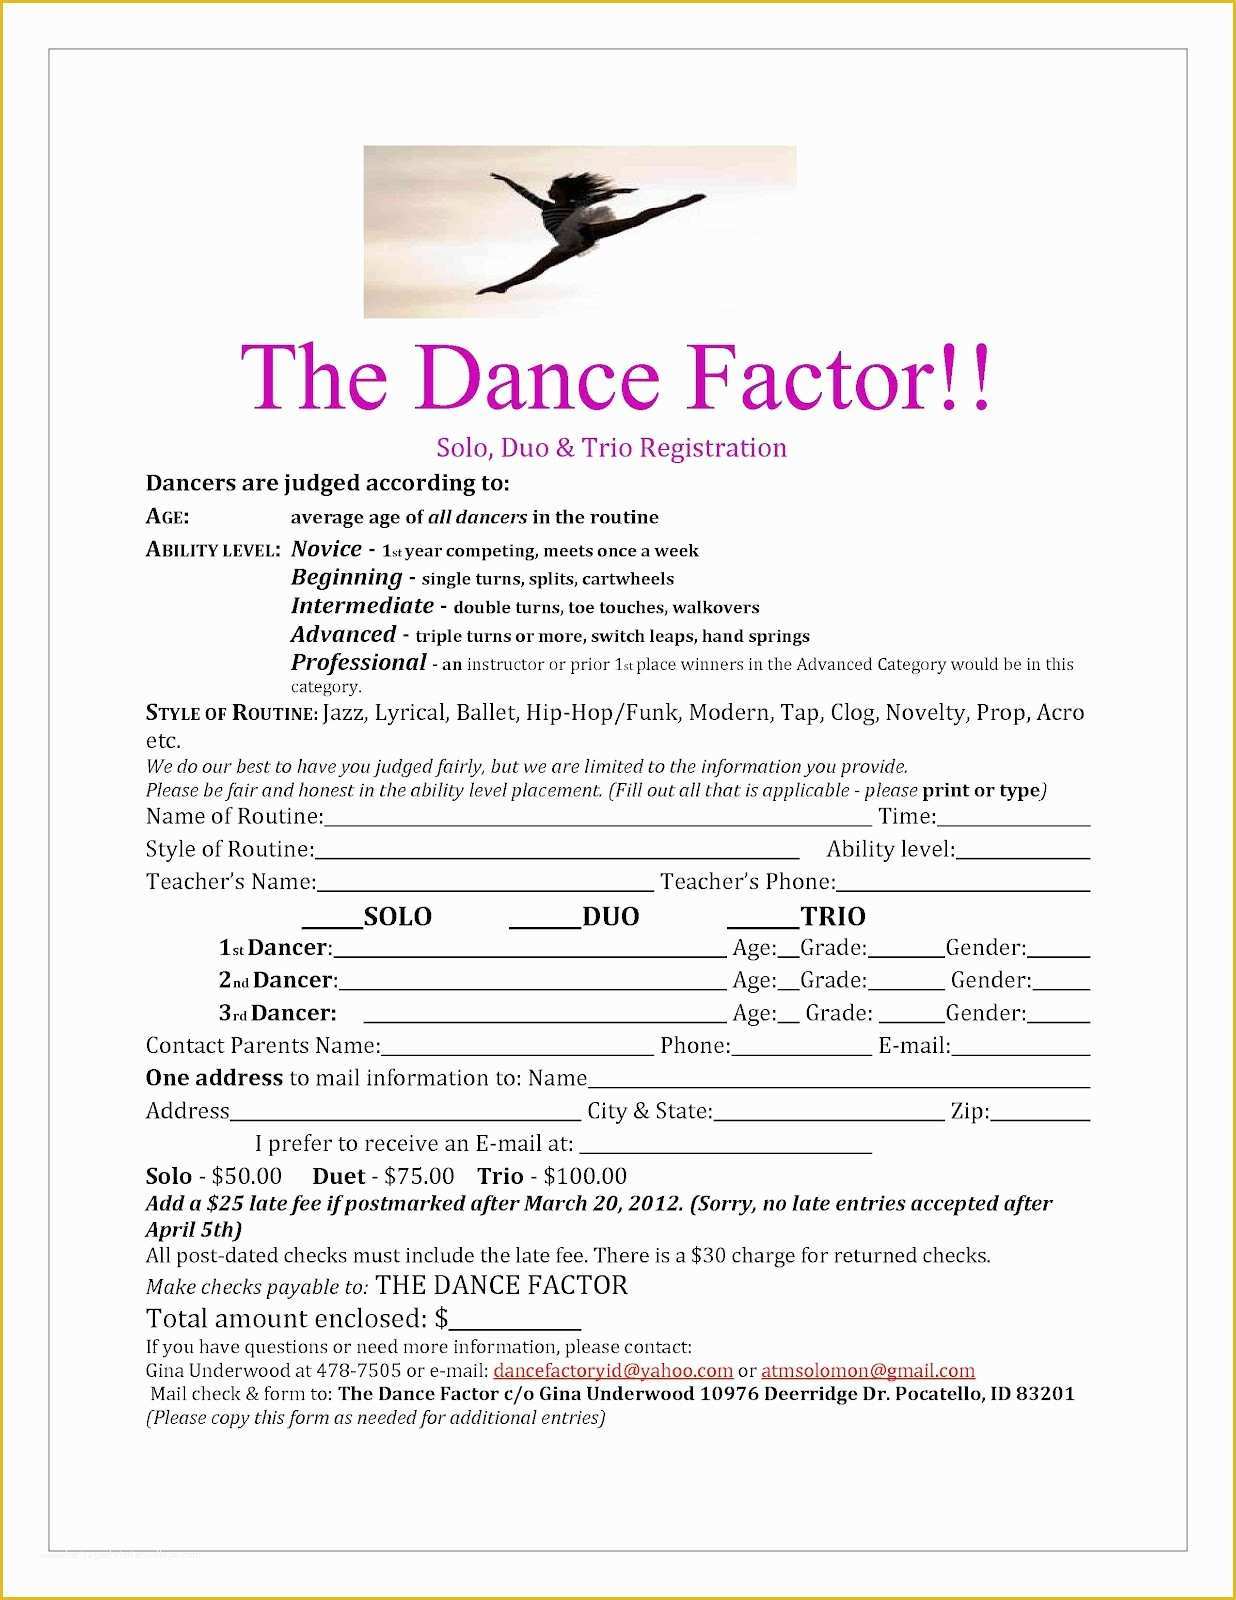 dance-registration-form-template-free-of-eagle-rock-dance-dance-factor-solo-registration-form